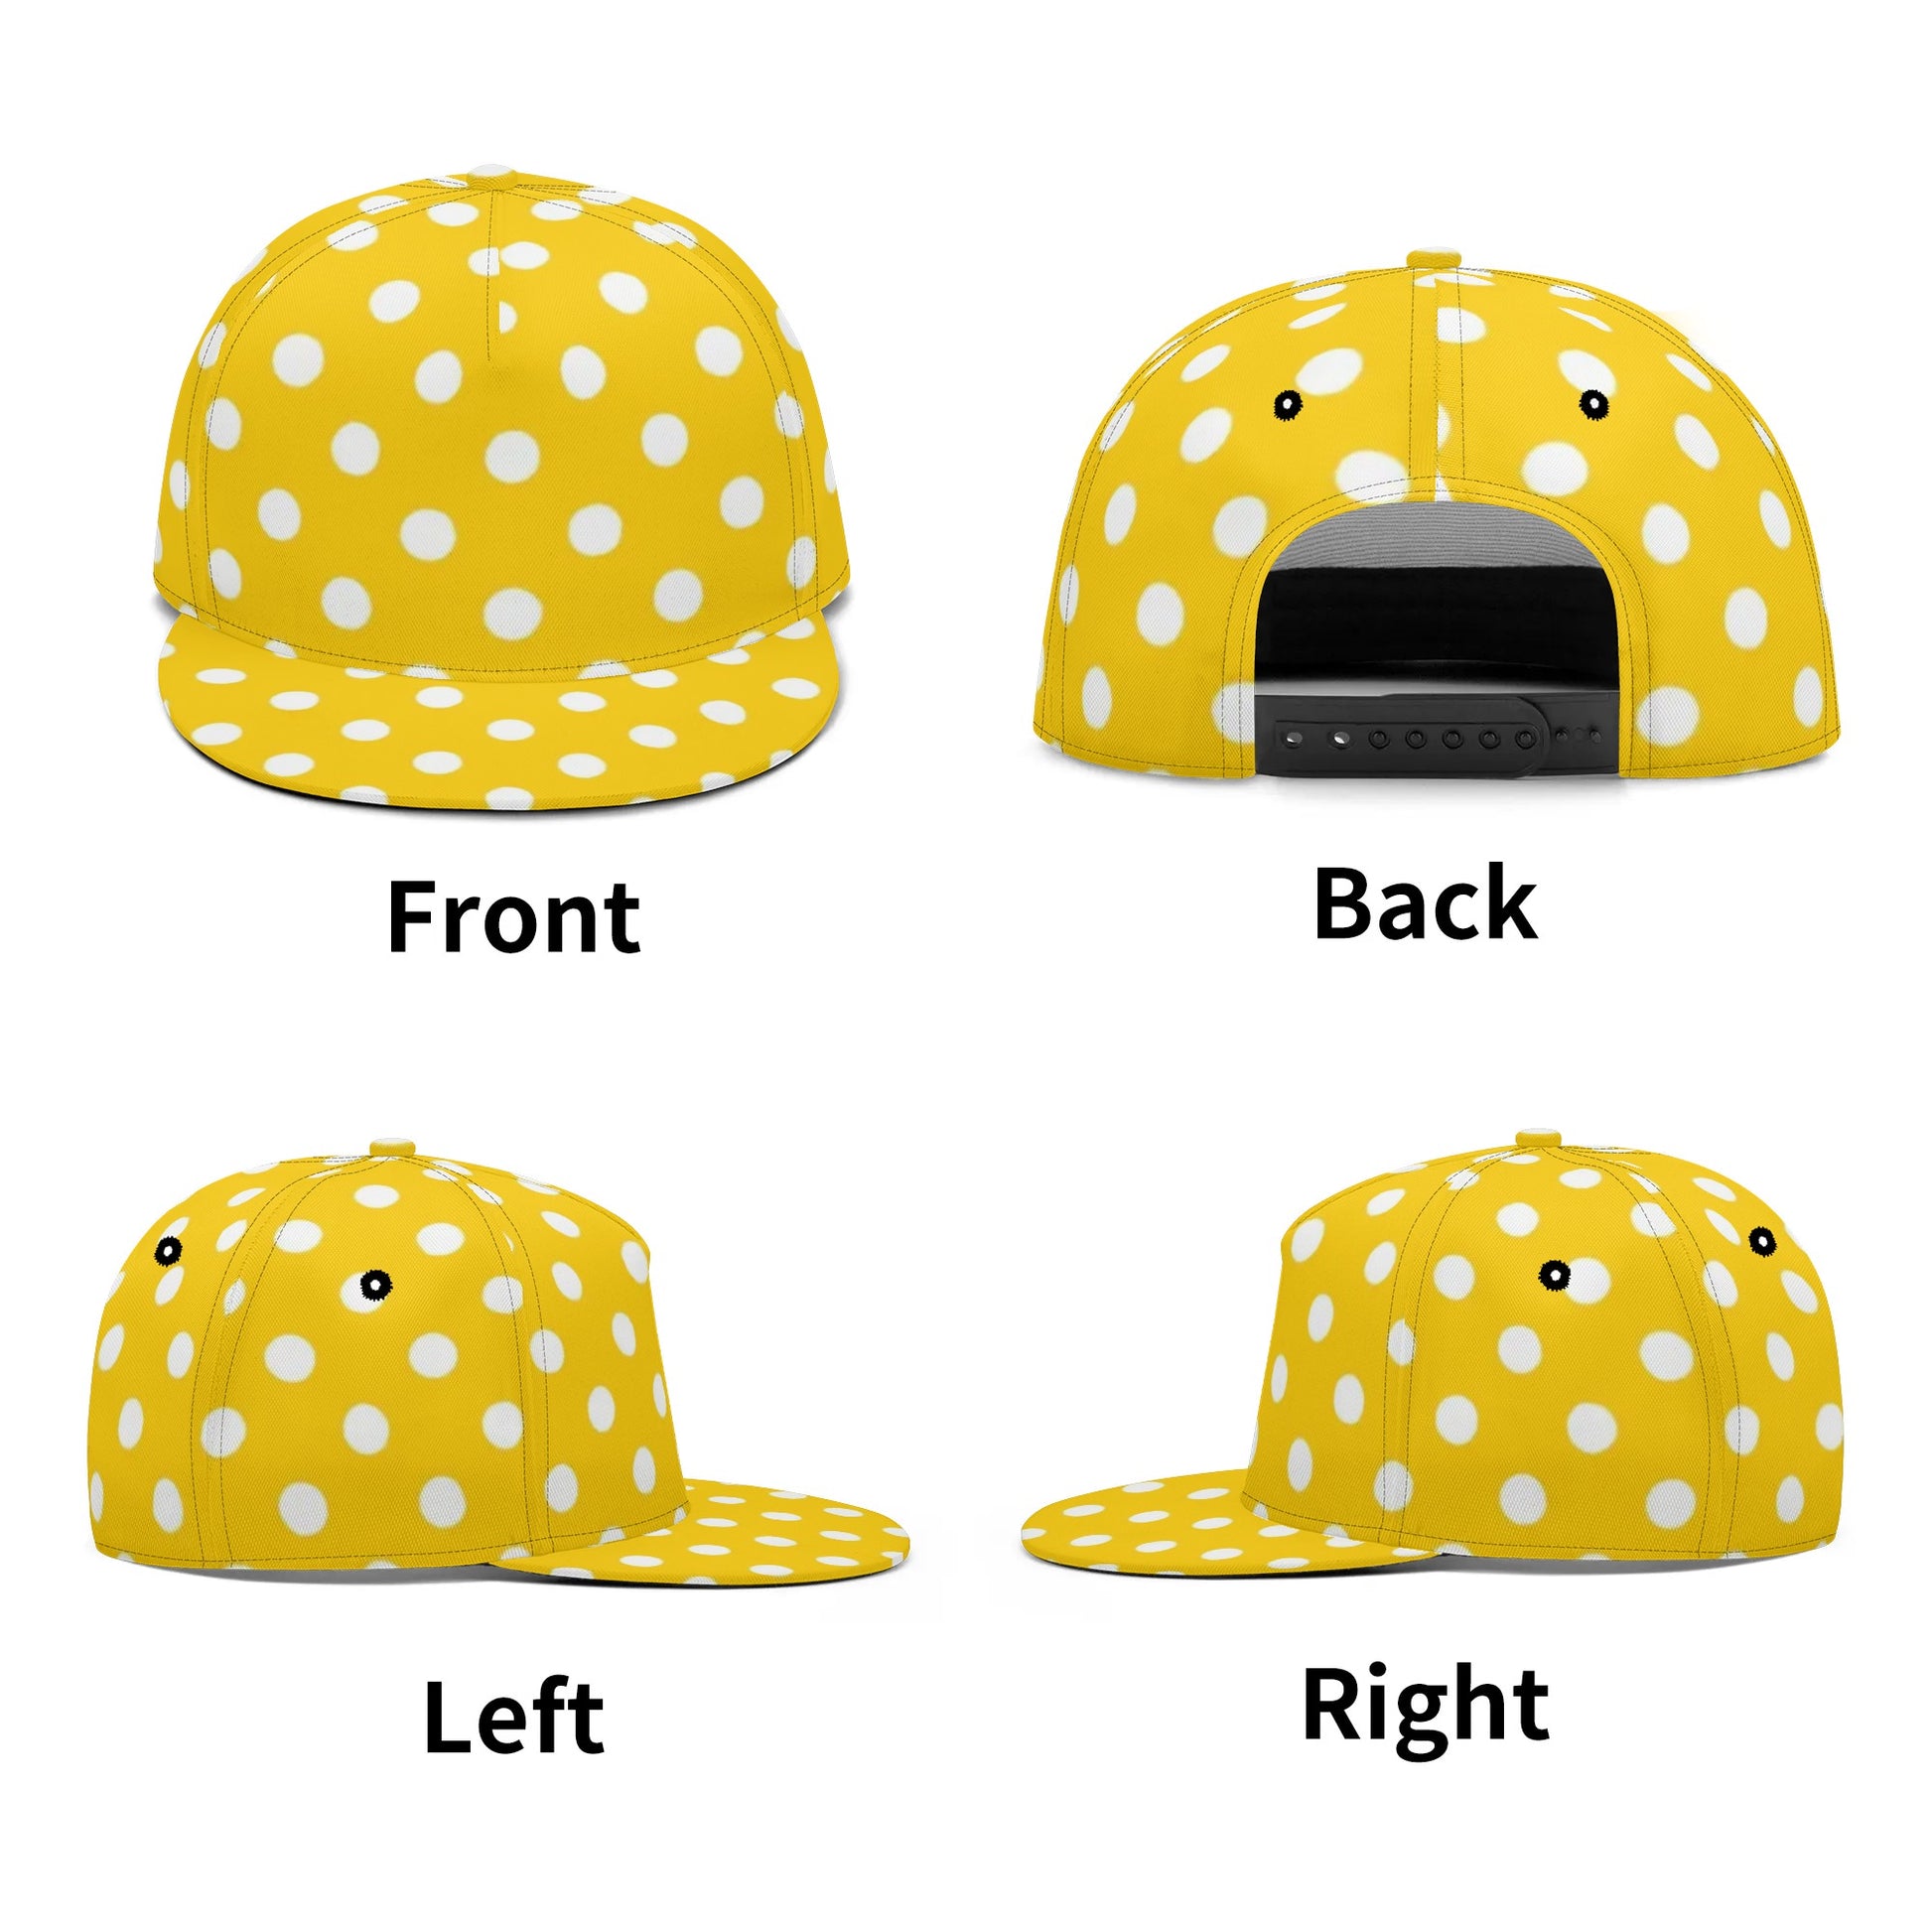 Yellow & White Polka Dots Snapback